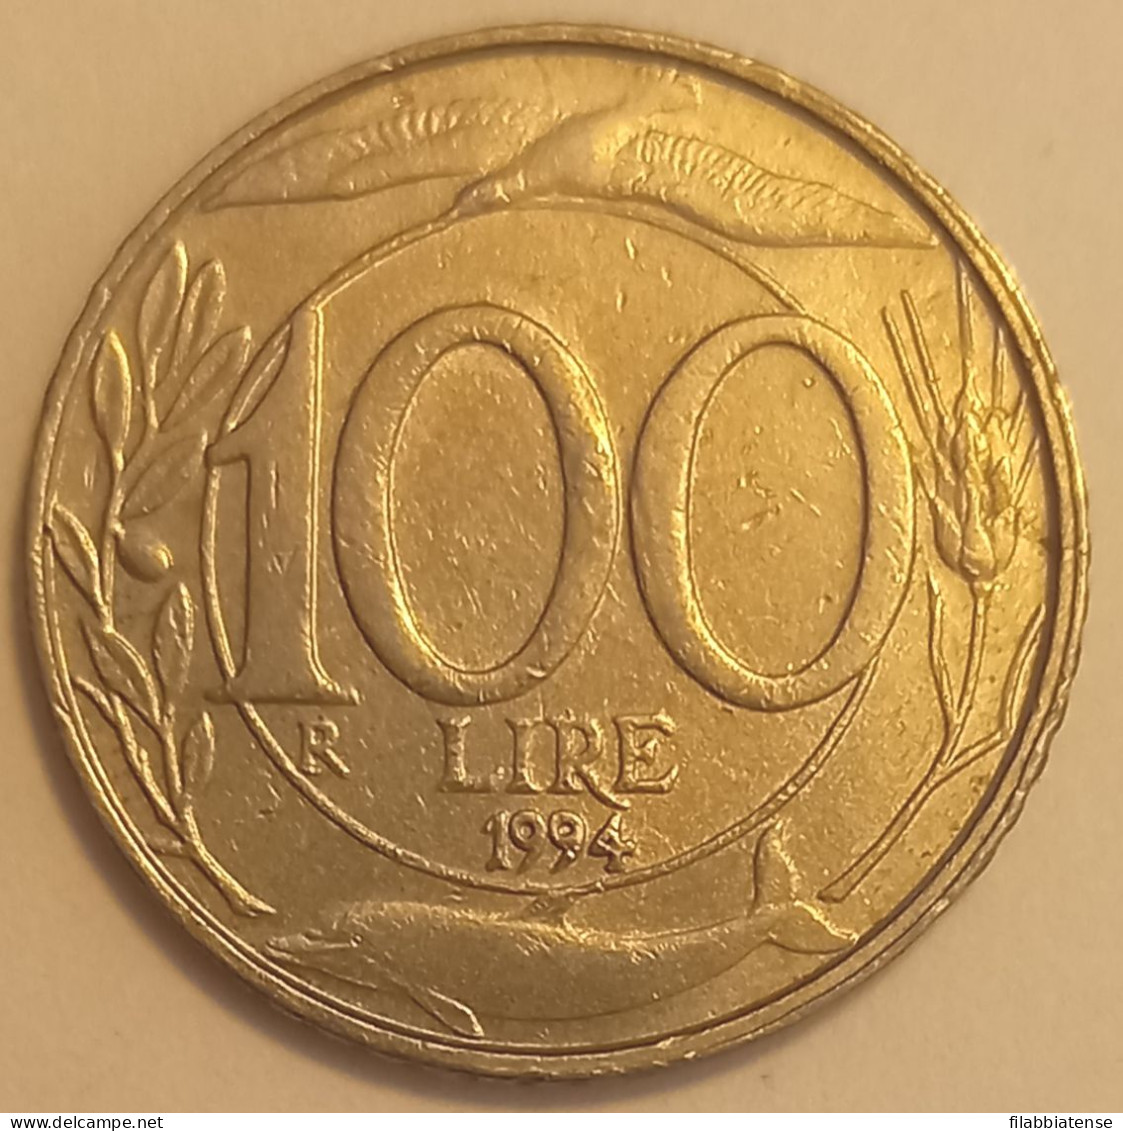 1994 - Italia 100 Lire   ----- - 100 Lire